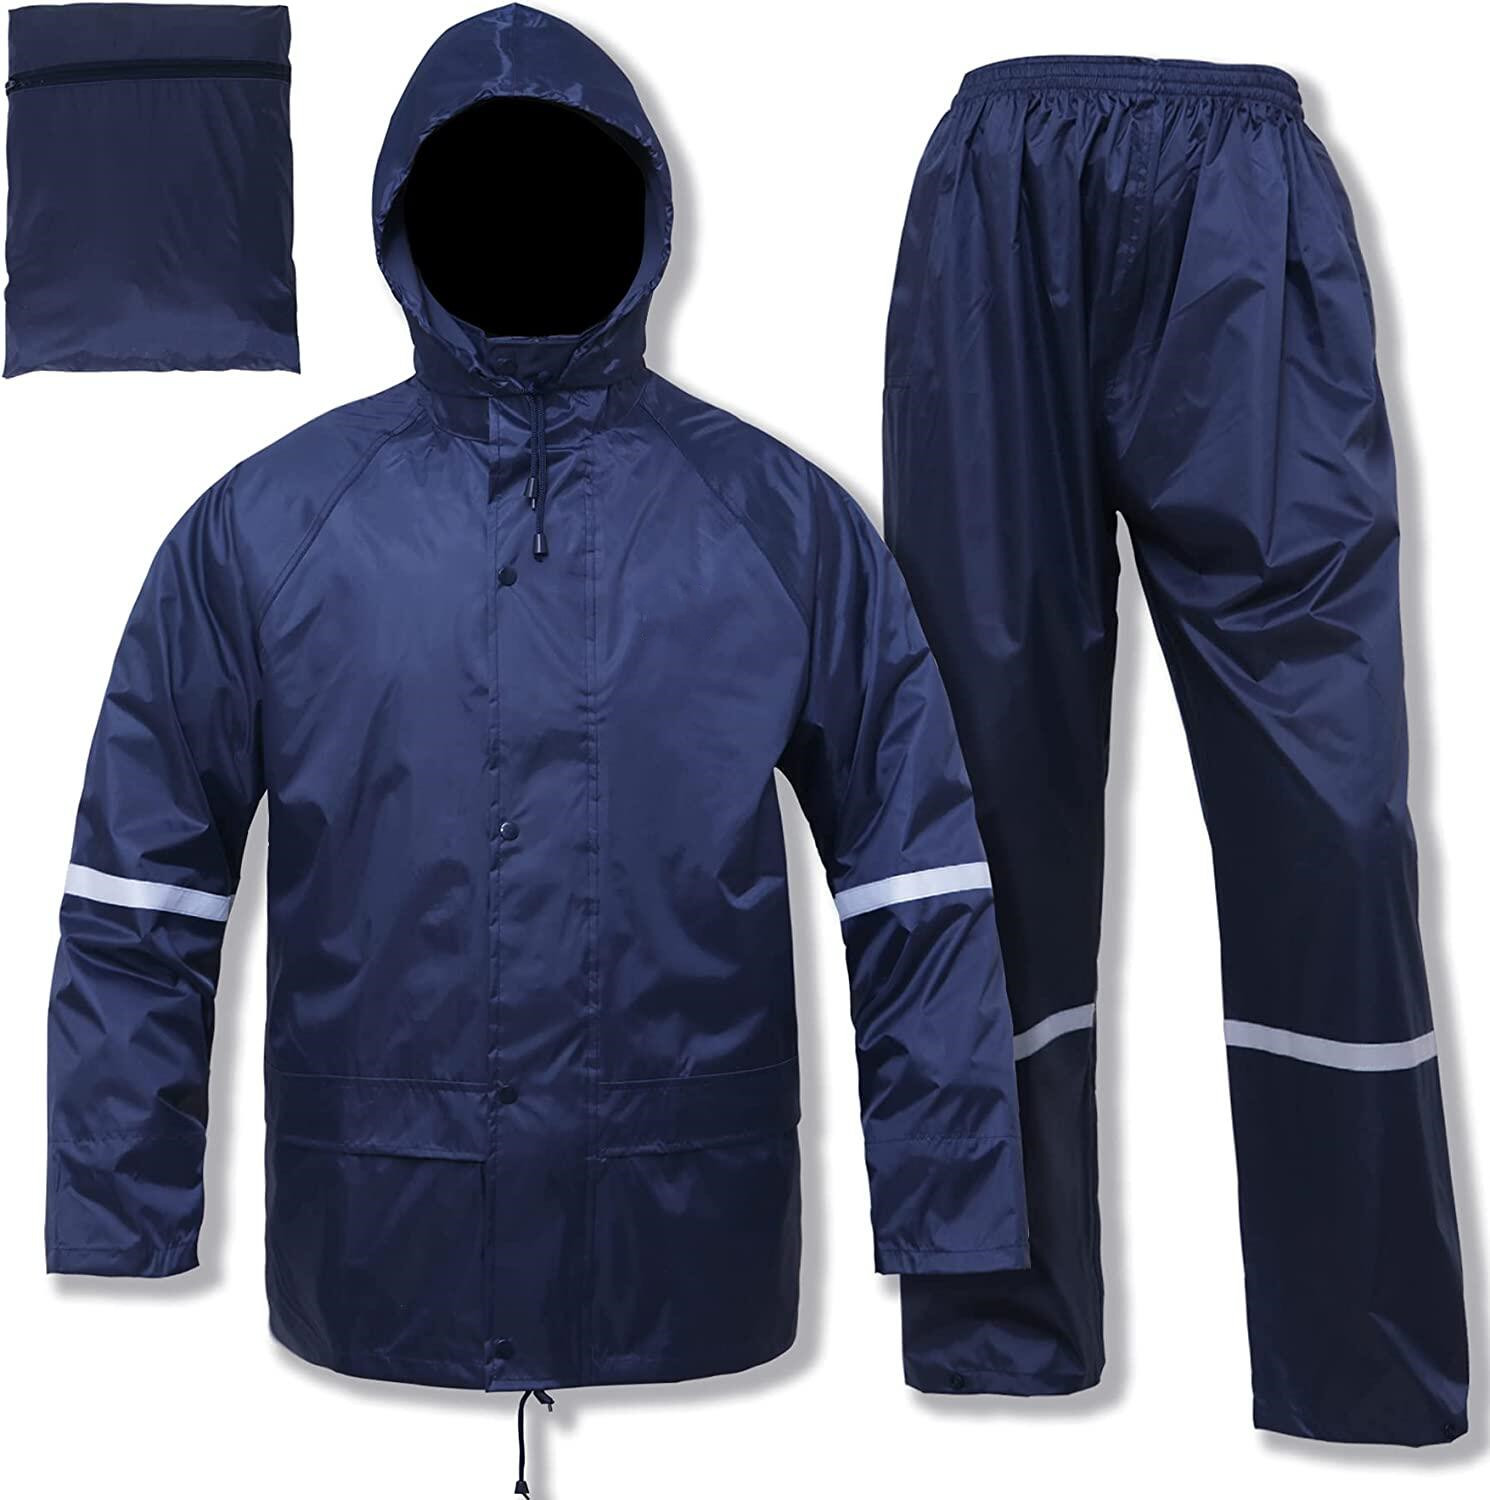 high quality rainsuit waterproof raincoat motorcycle suit jacket and pant